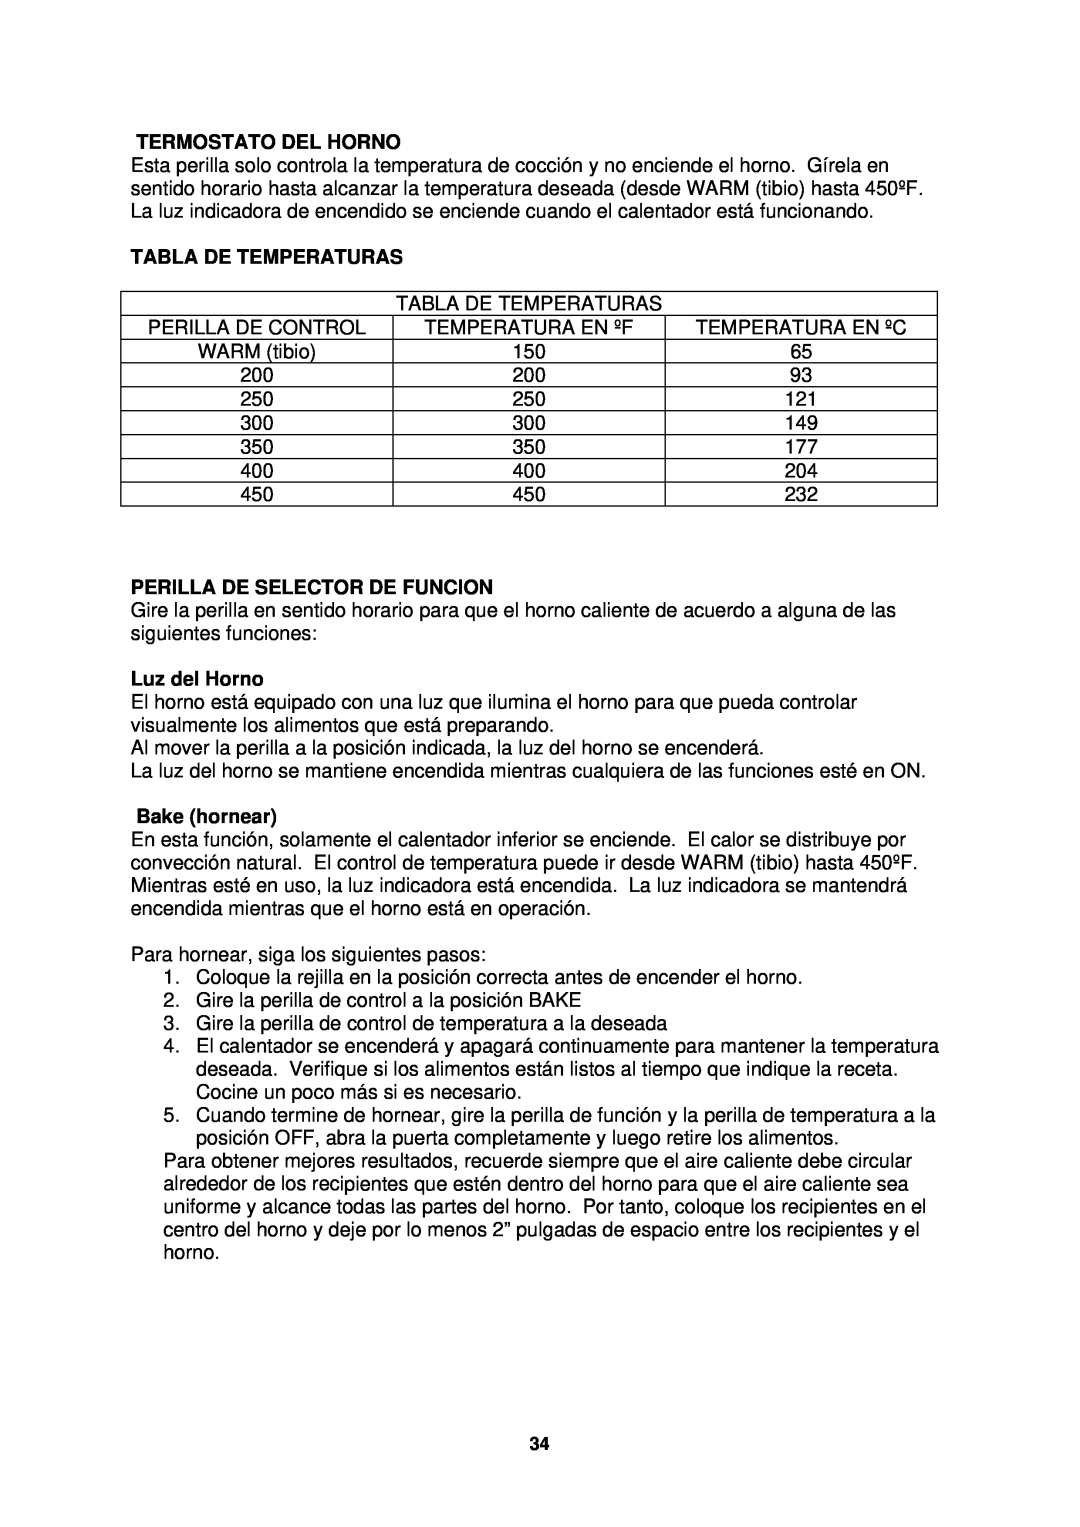 Avanti ER2001G Termostato Del Horno, Tabla De Temperaturas, Perilla De Selector De Funcion, Luz del Horno, Bake hornear 